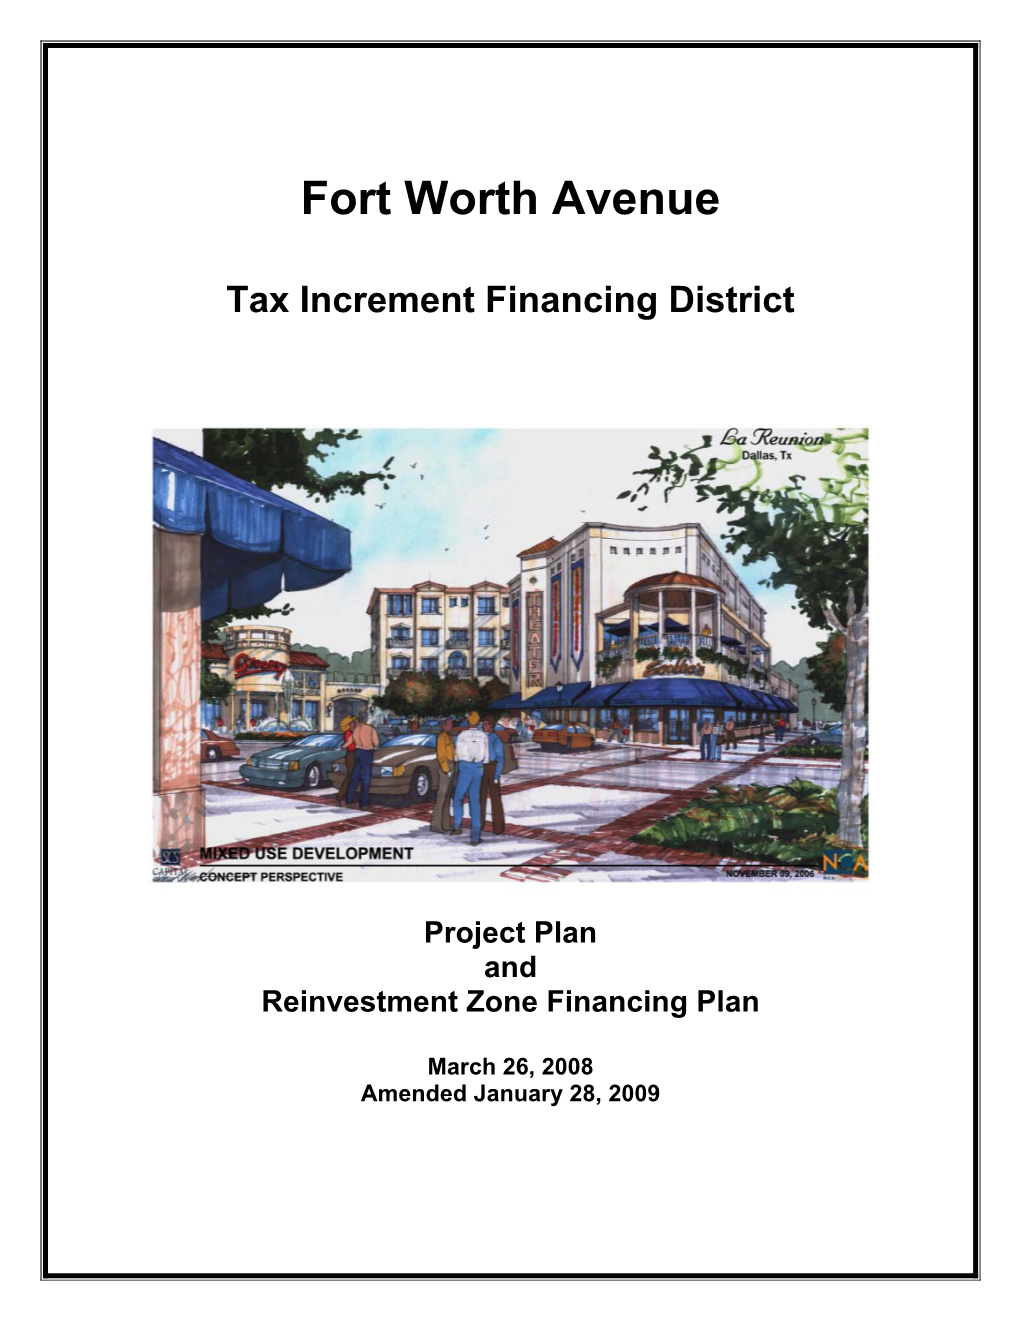 Fort Worth Avenue TIF District Plan